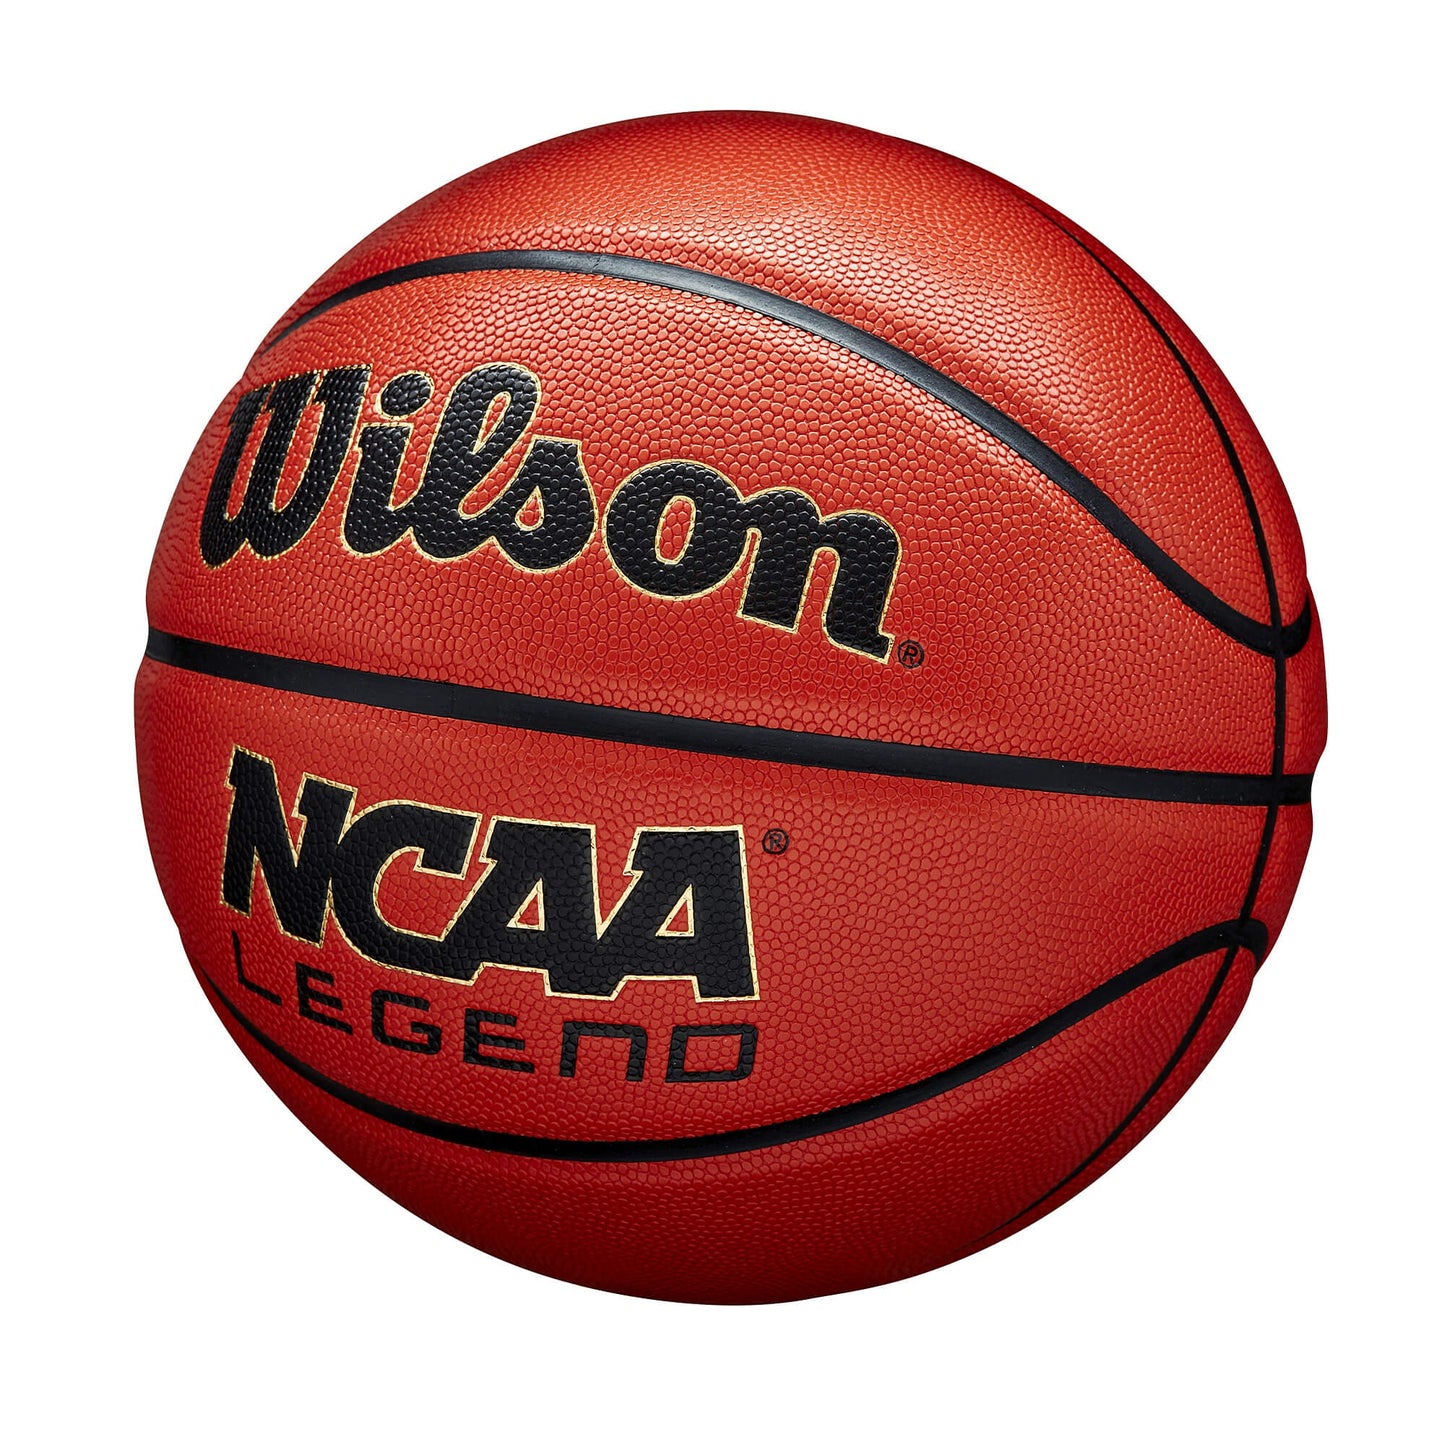 Wilson NCAA LEGEND BSKT Orange/Black (sz. 7)